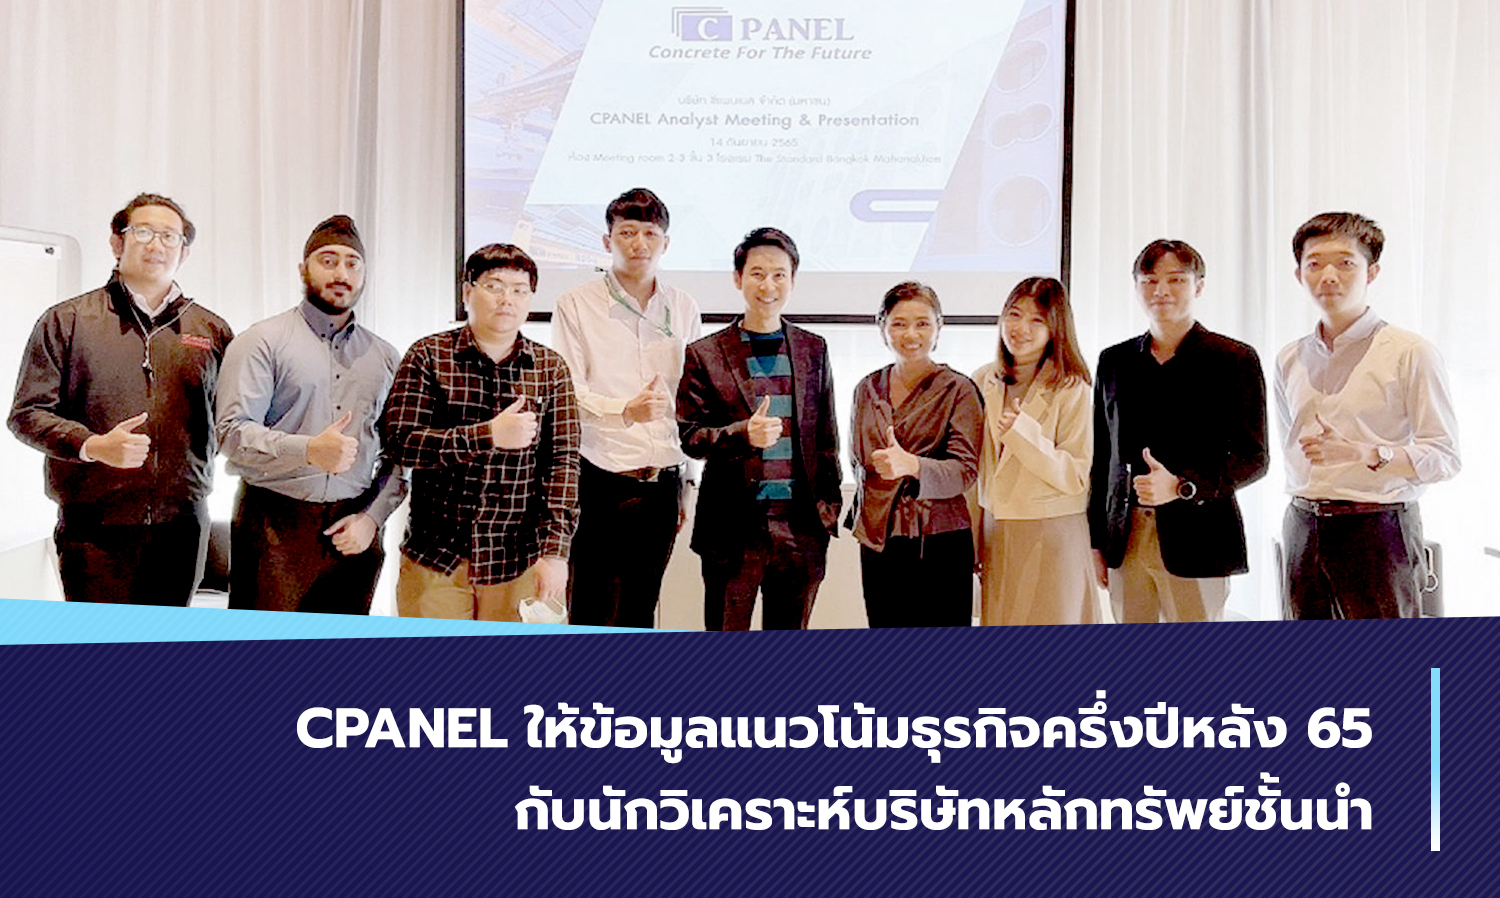 cpanel-ให้ข้อมูลแนวโน้มธุรกิจครึ่งปีหล